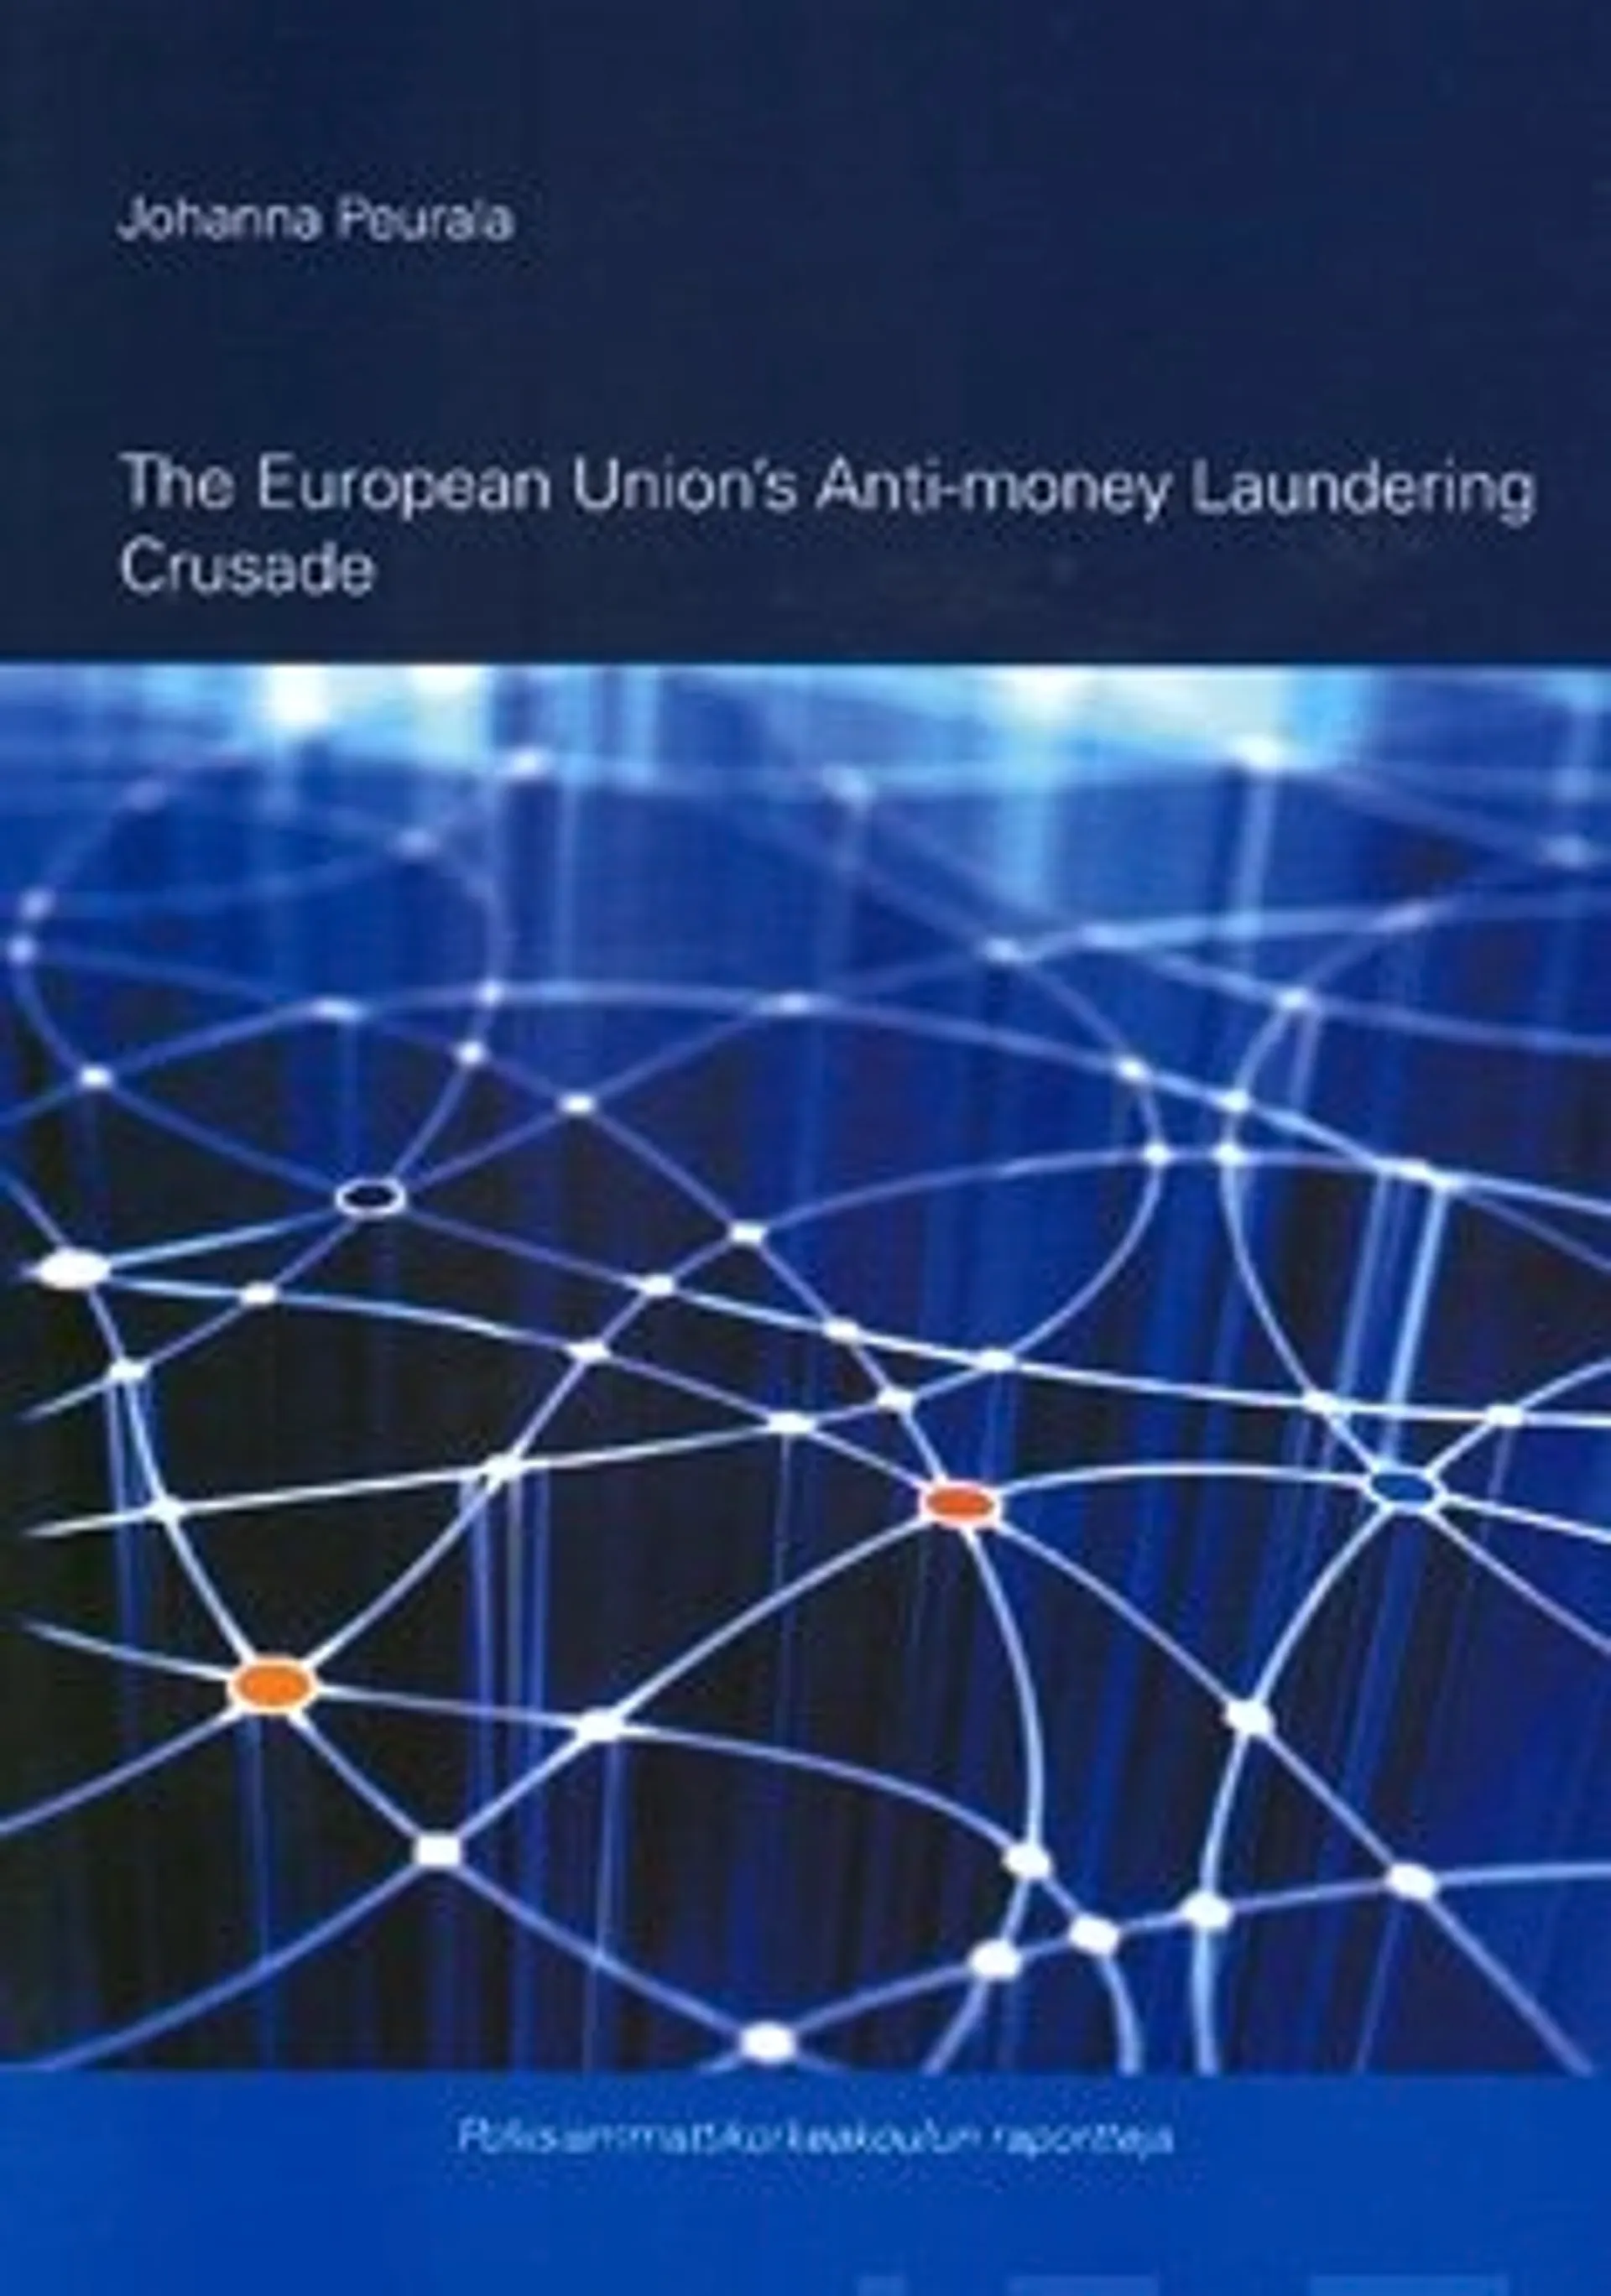 The European Union's anti-money laundering crusade